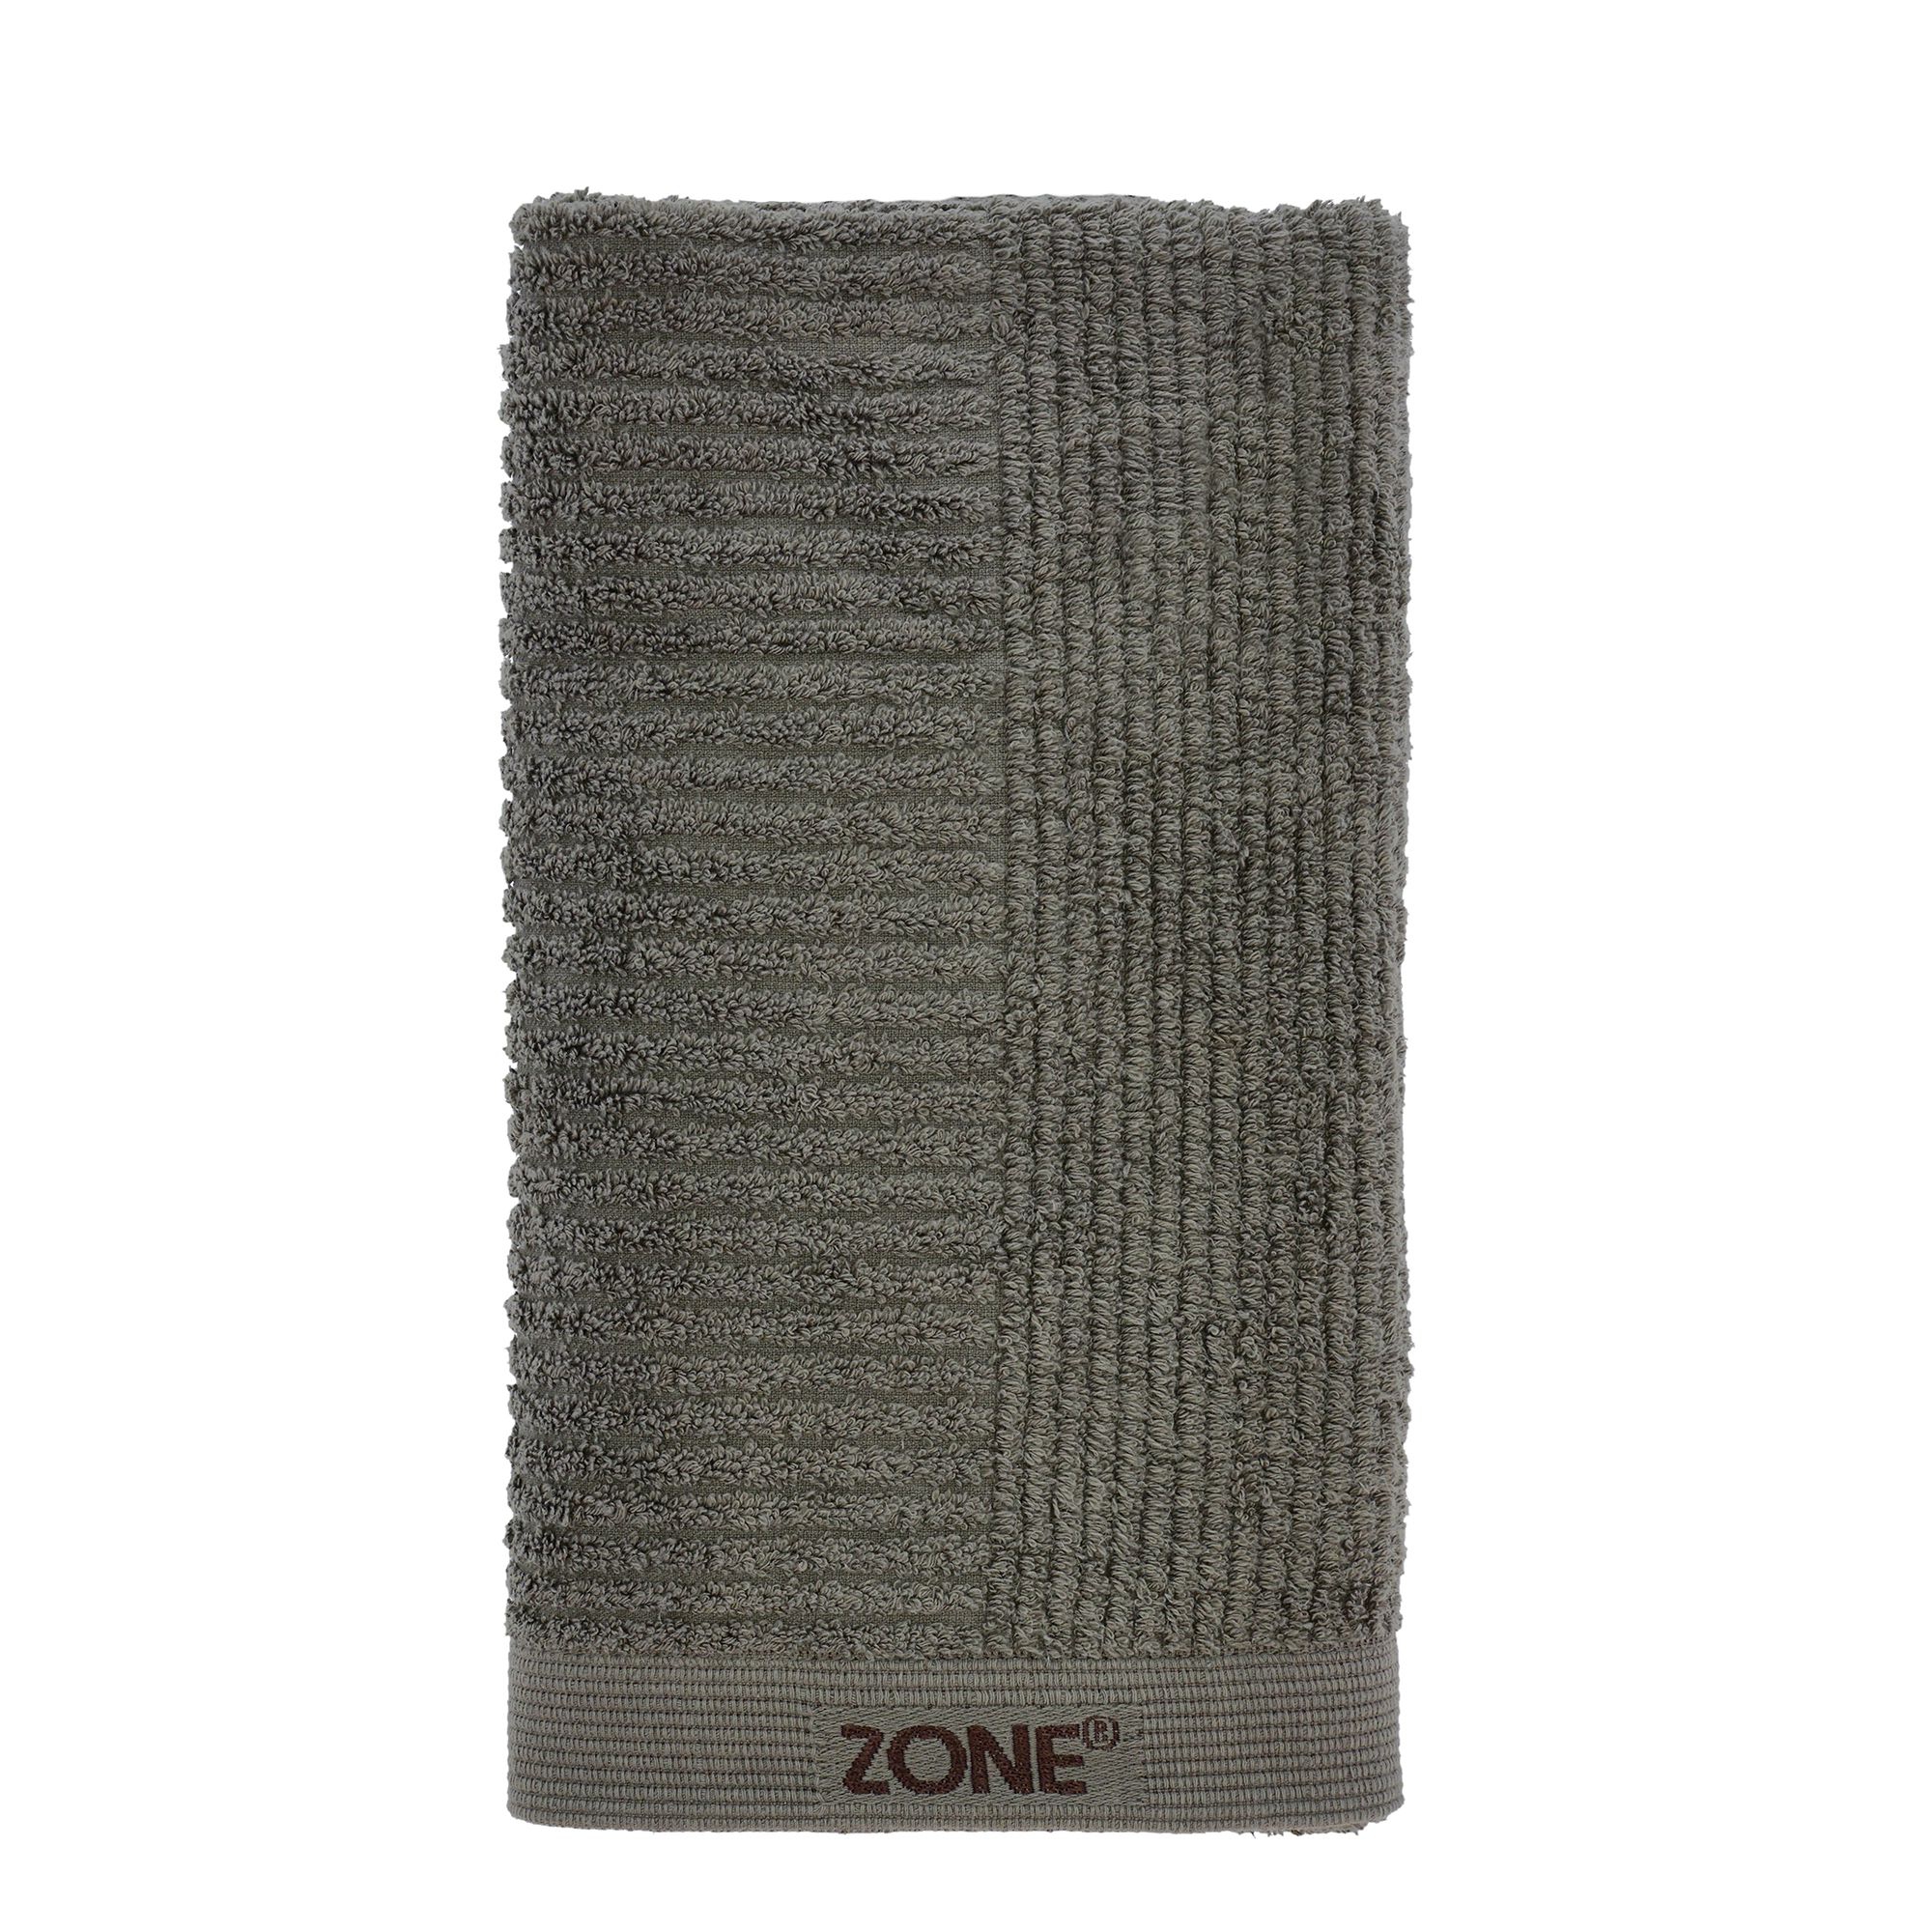 Zone - Classic Towel - 50 x 100 cm - Olive Green